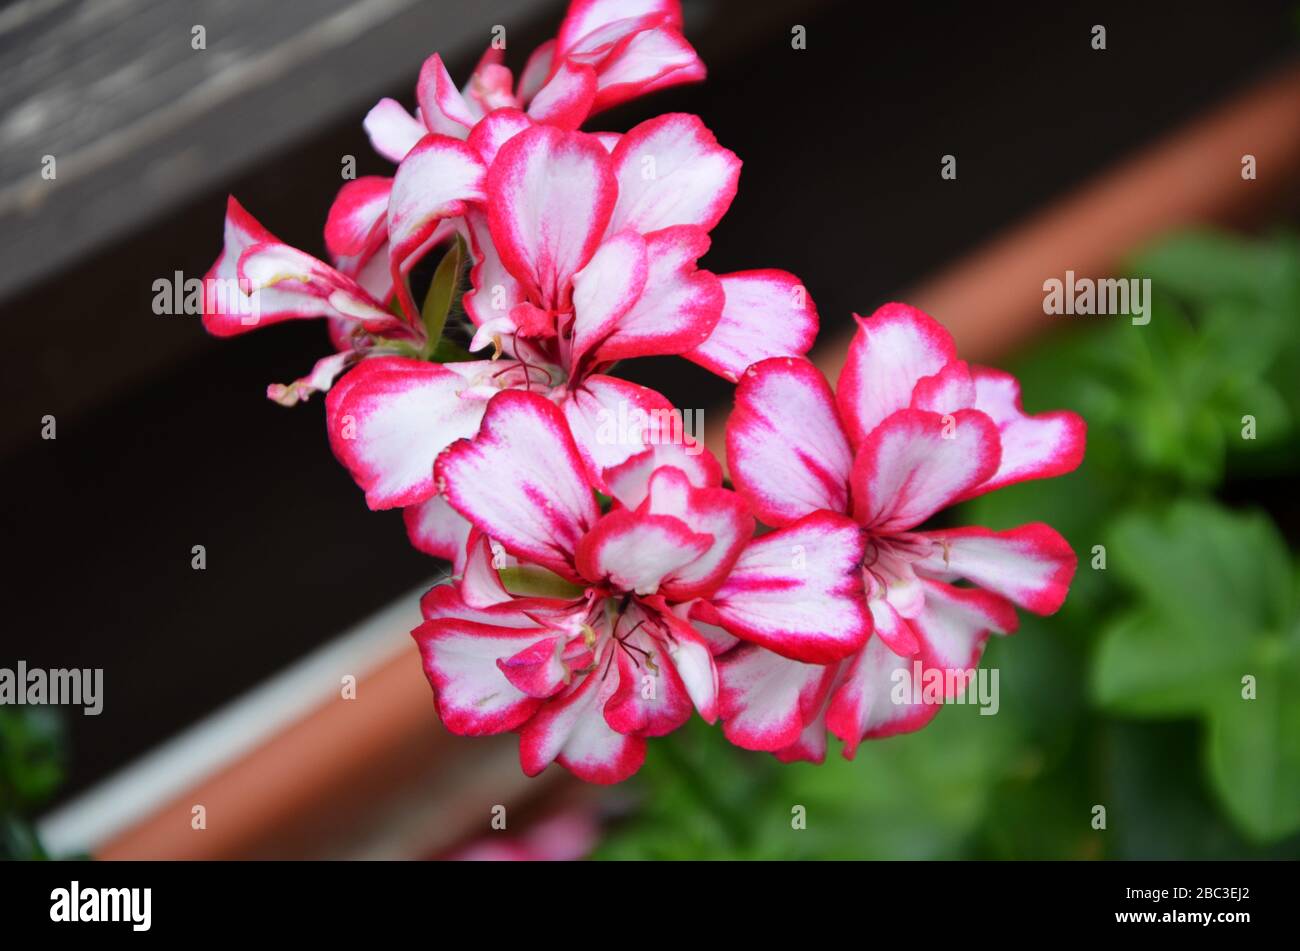 pelargonium flower close up view Stock Photo